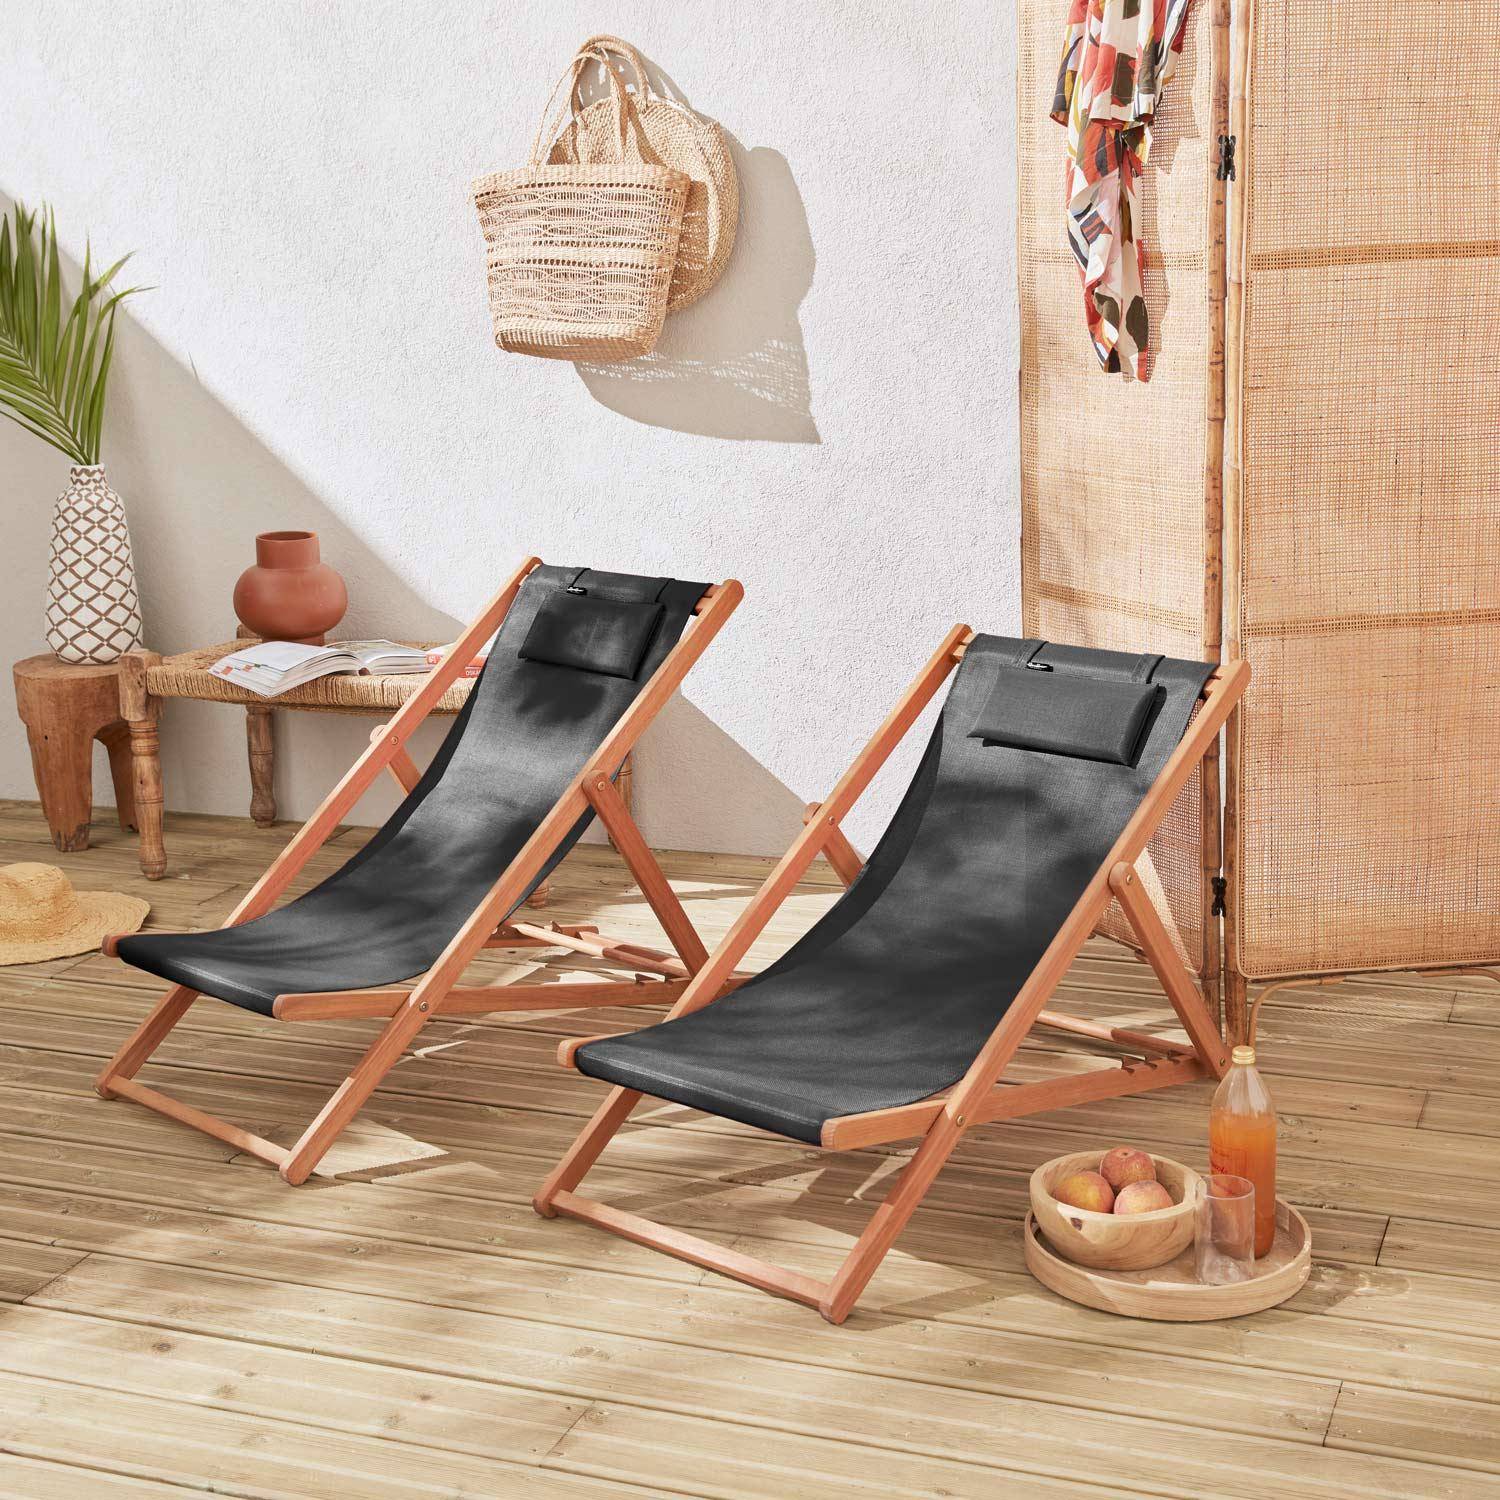 Pair of pre-oiled FSC eucalyptus deck chairs with headrest cushions - Creus - Wood/Black Photo1